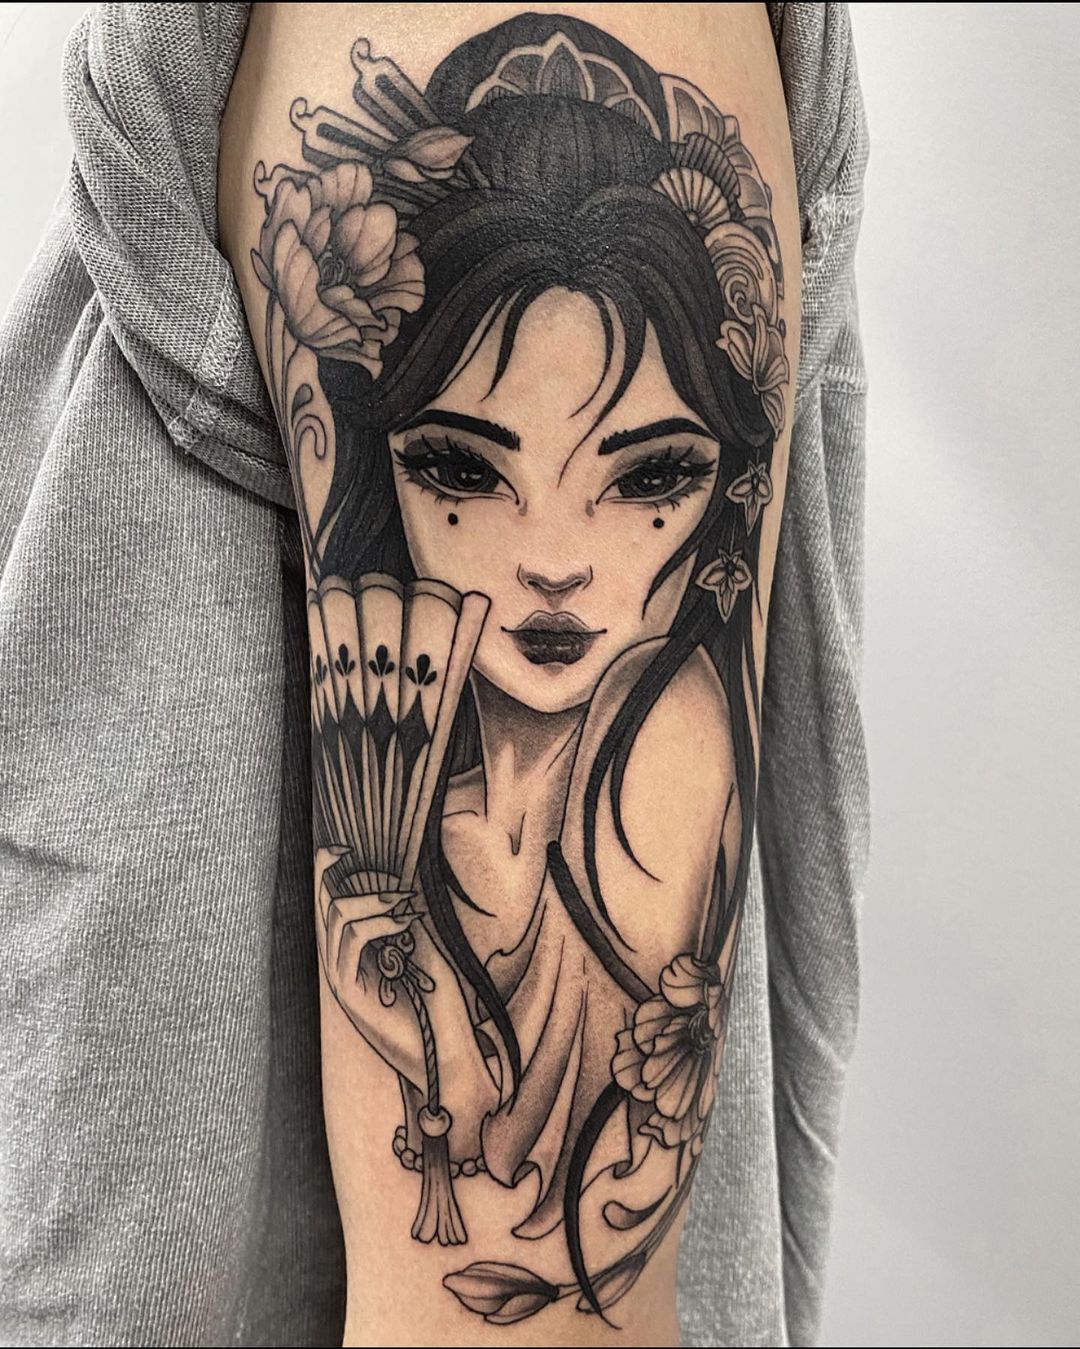 Black and White Japanese Geisha Tattoo on Arm